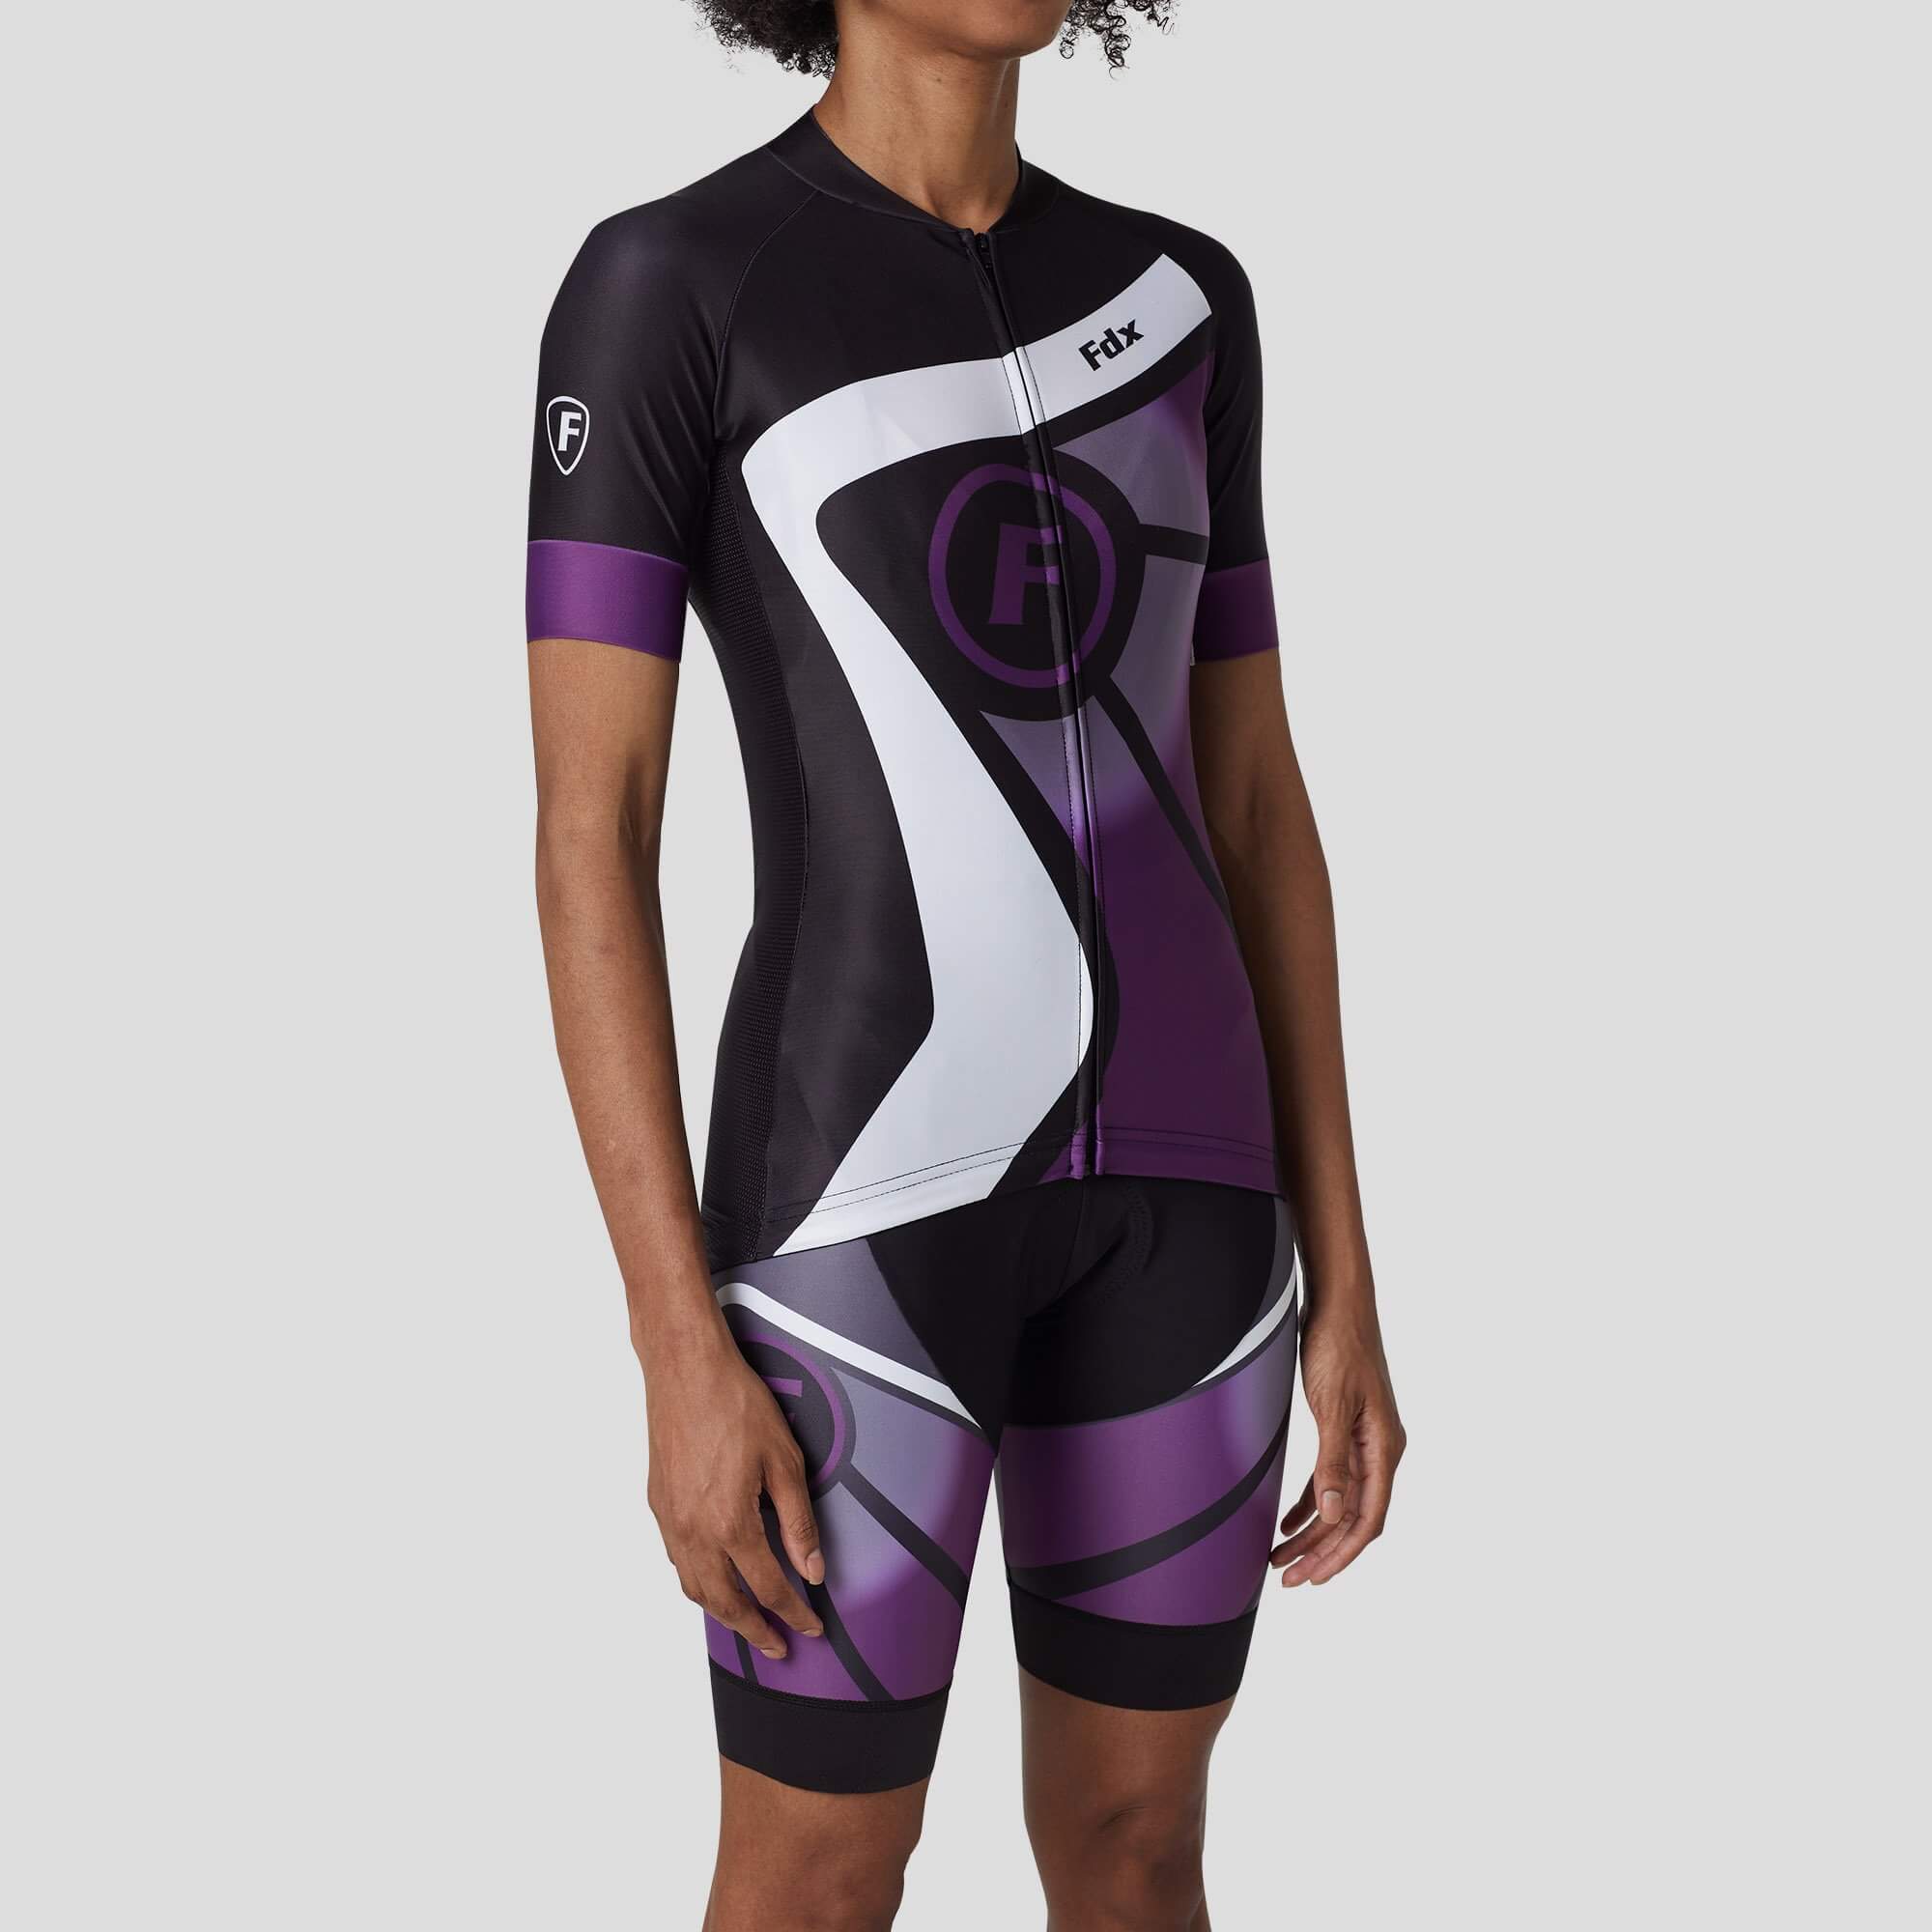 Fdx Women's Black & Purple Short Sleeve Cycling Jersey & Gel Padded Bib Shorts Best Summer Road Bike Wear Light Weight, Hi viz Reflectors & Pockets - Signature